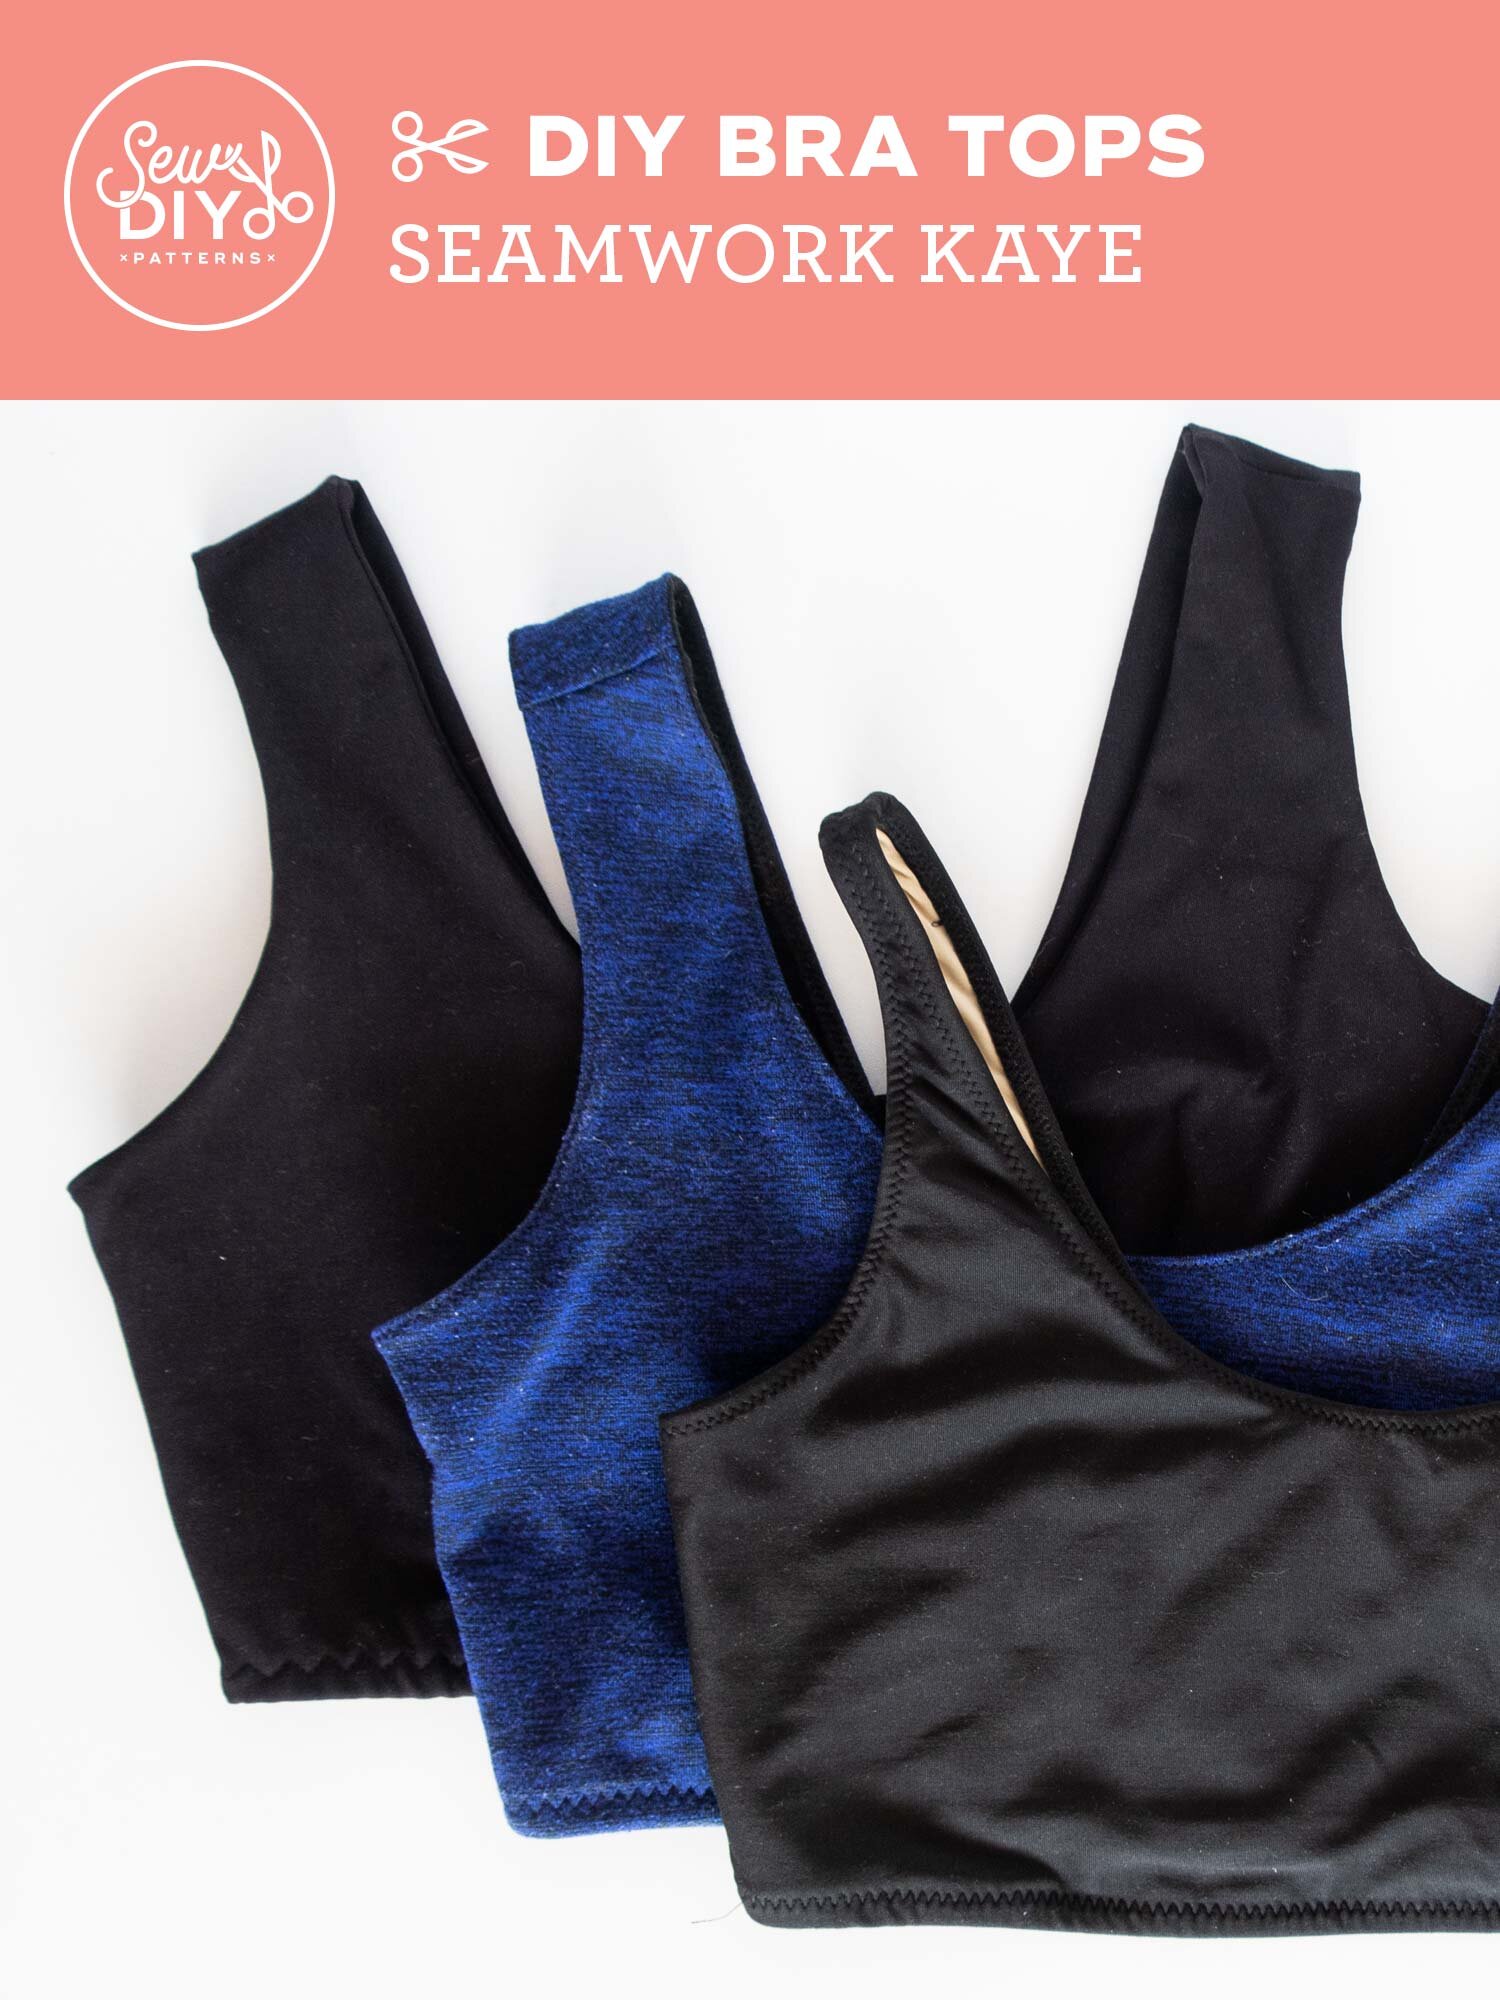 DIY Bra Tops - A review of the Seamwork Kaye pattern — Sew DIY